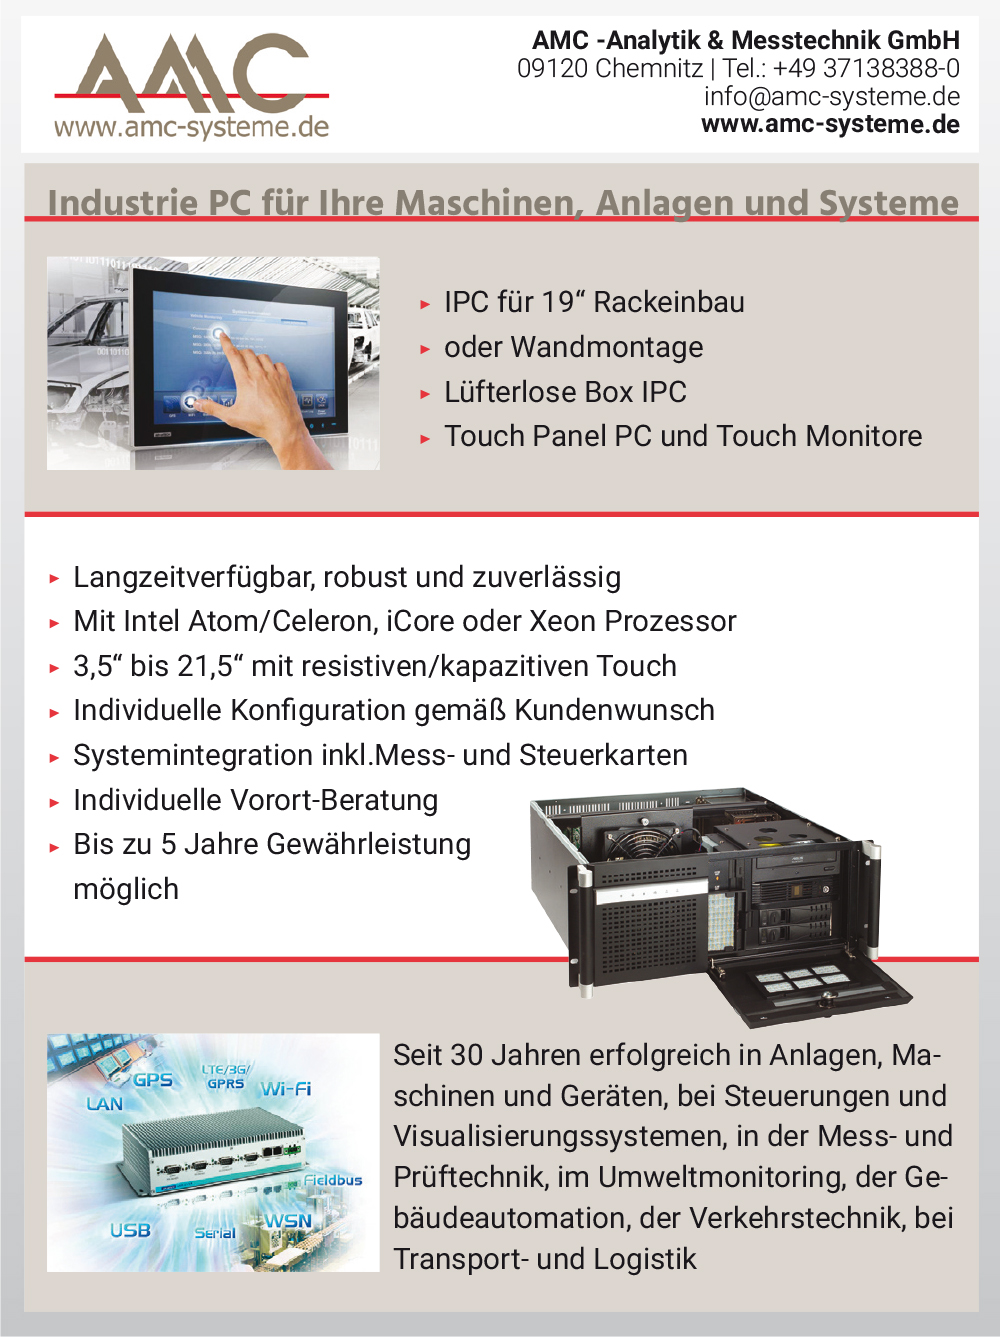 Produktübersicht AMC -Analytik & Messtechnik GmbH